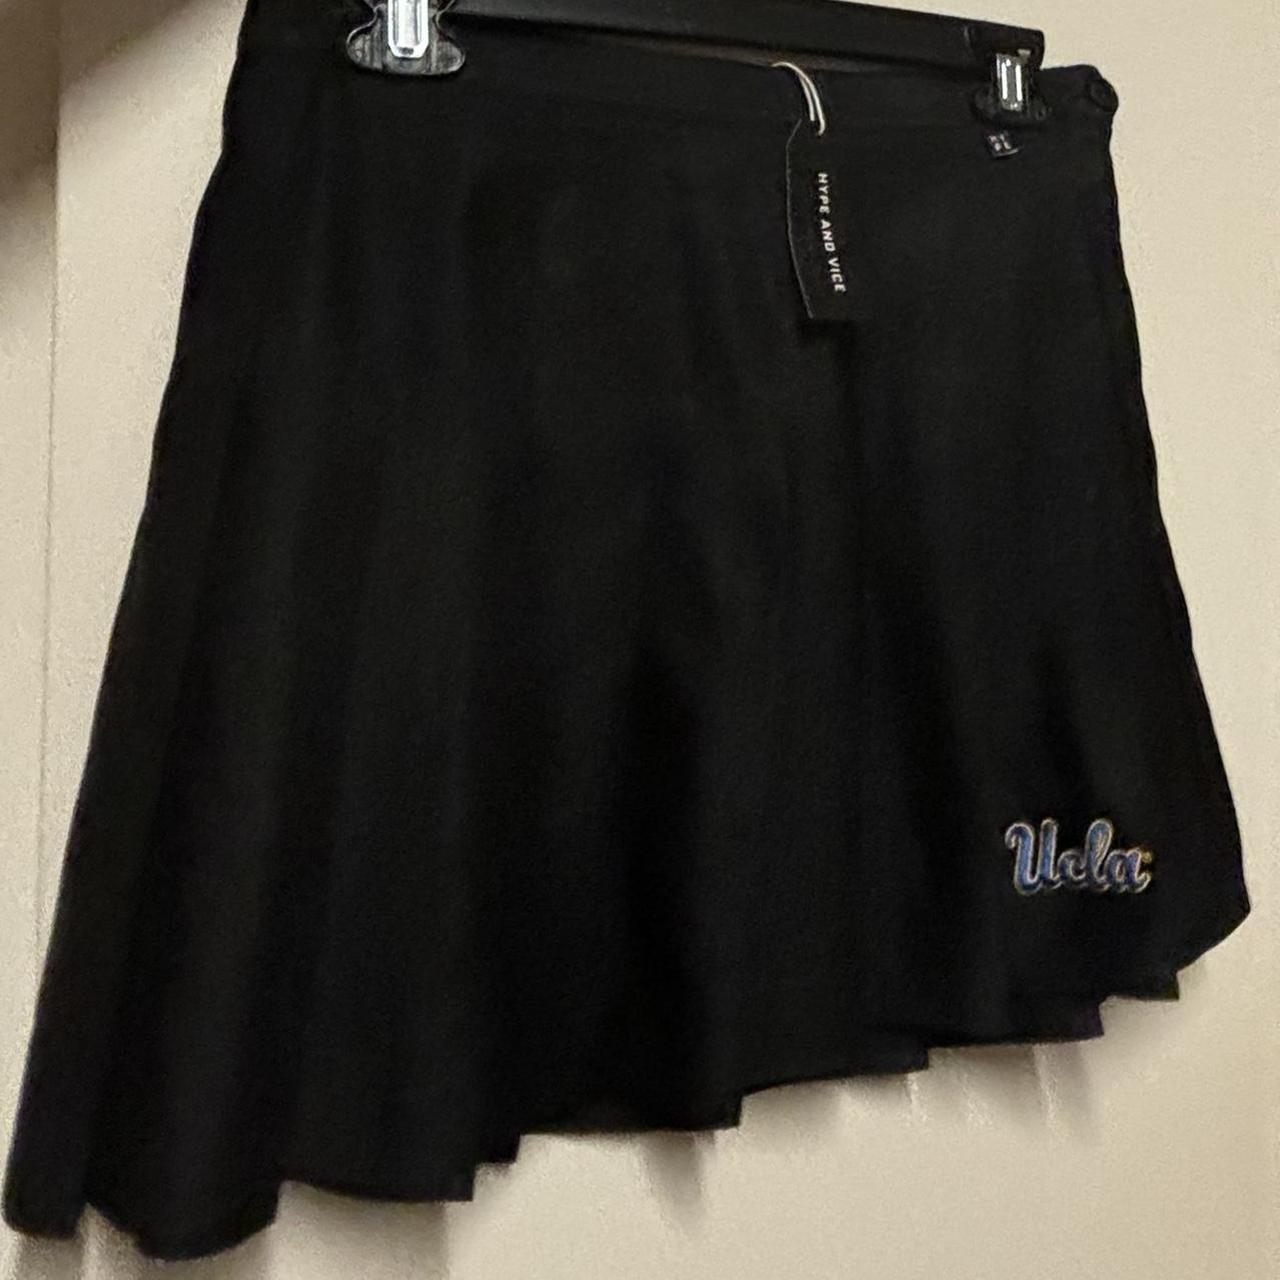 black tennis skirt with leggings by anivivo - Depop